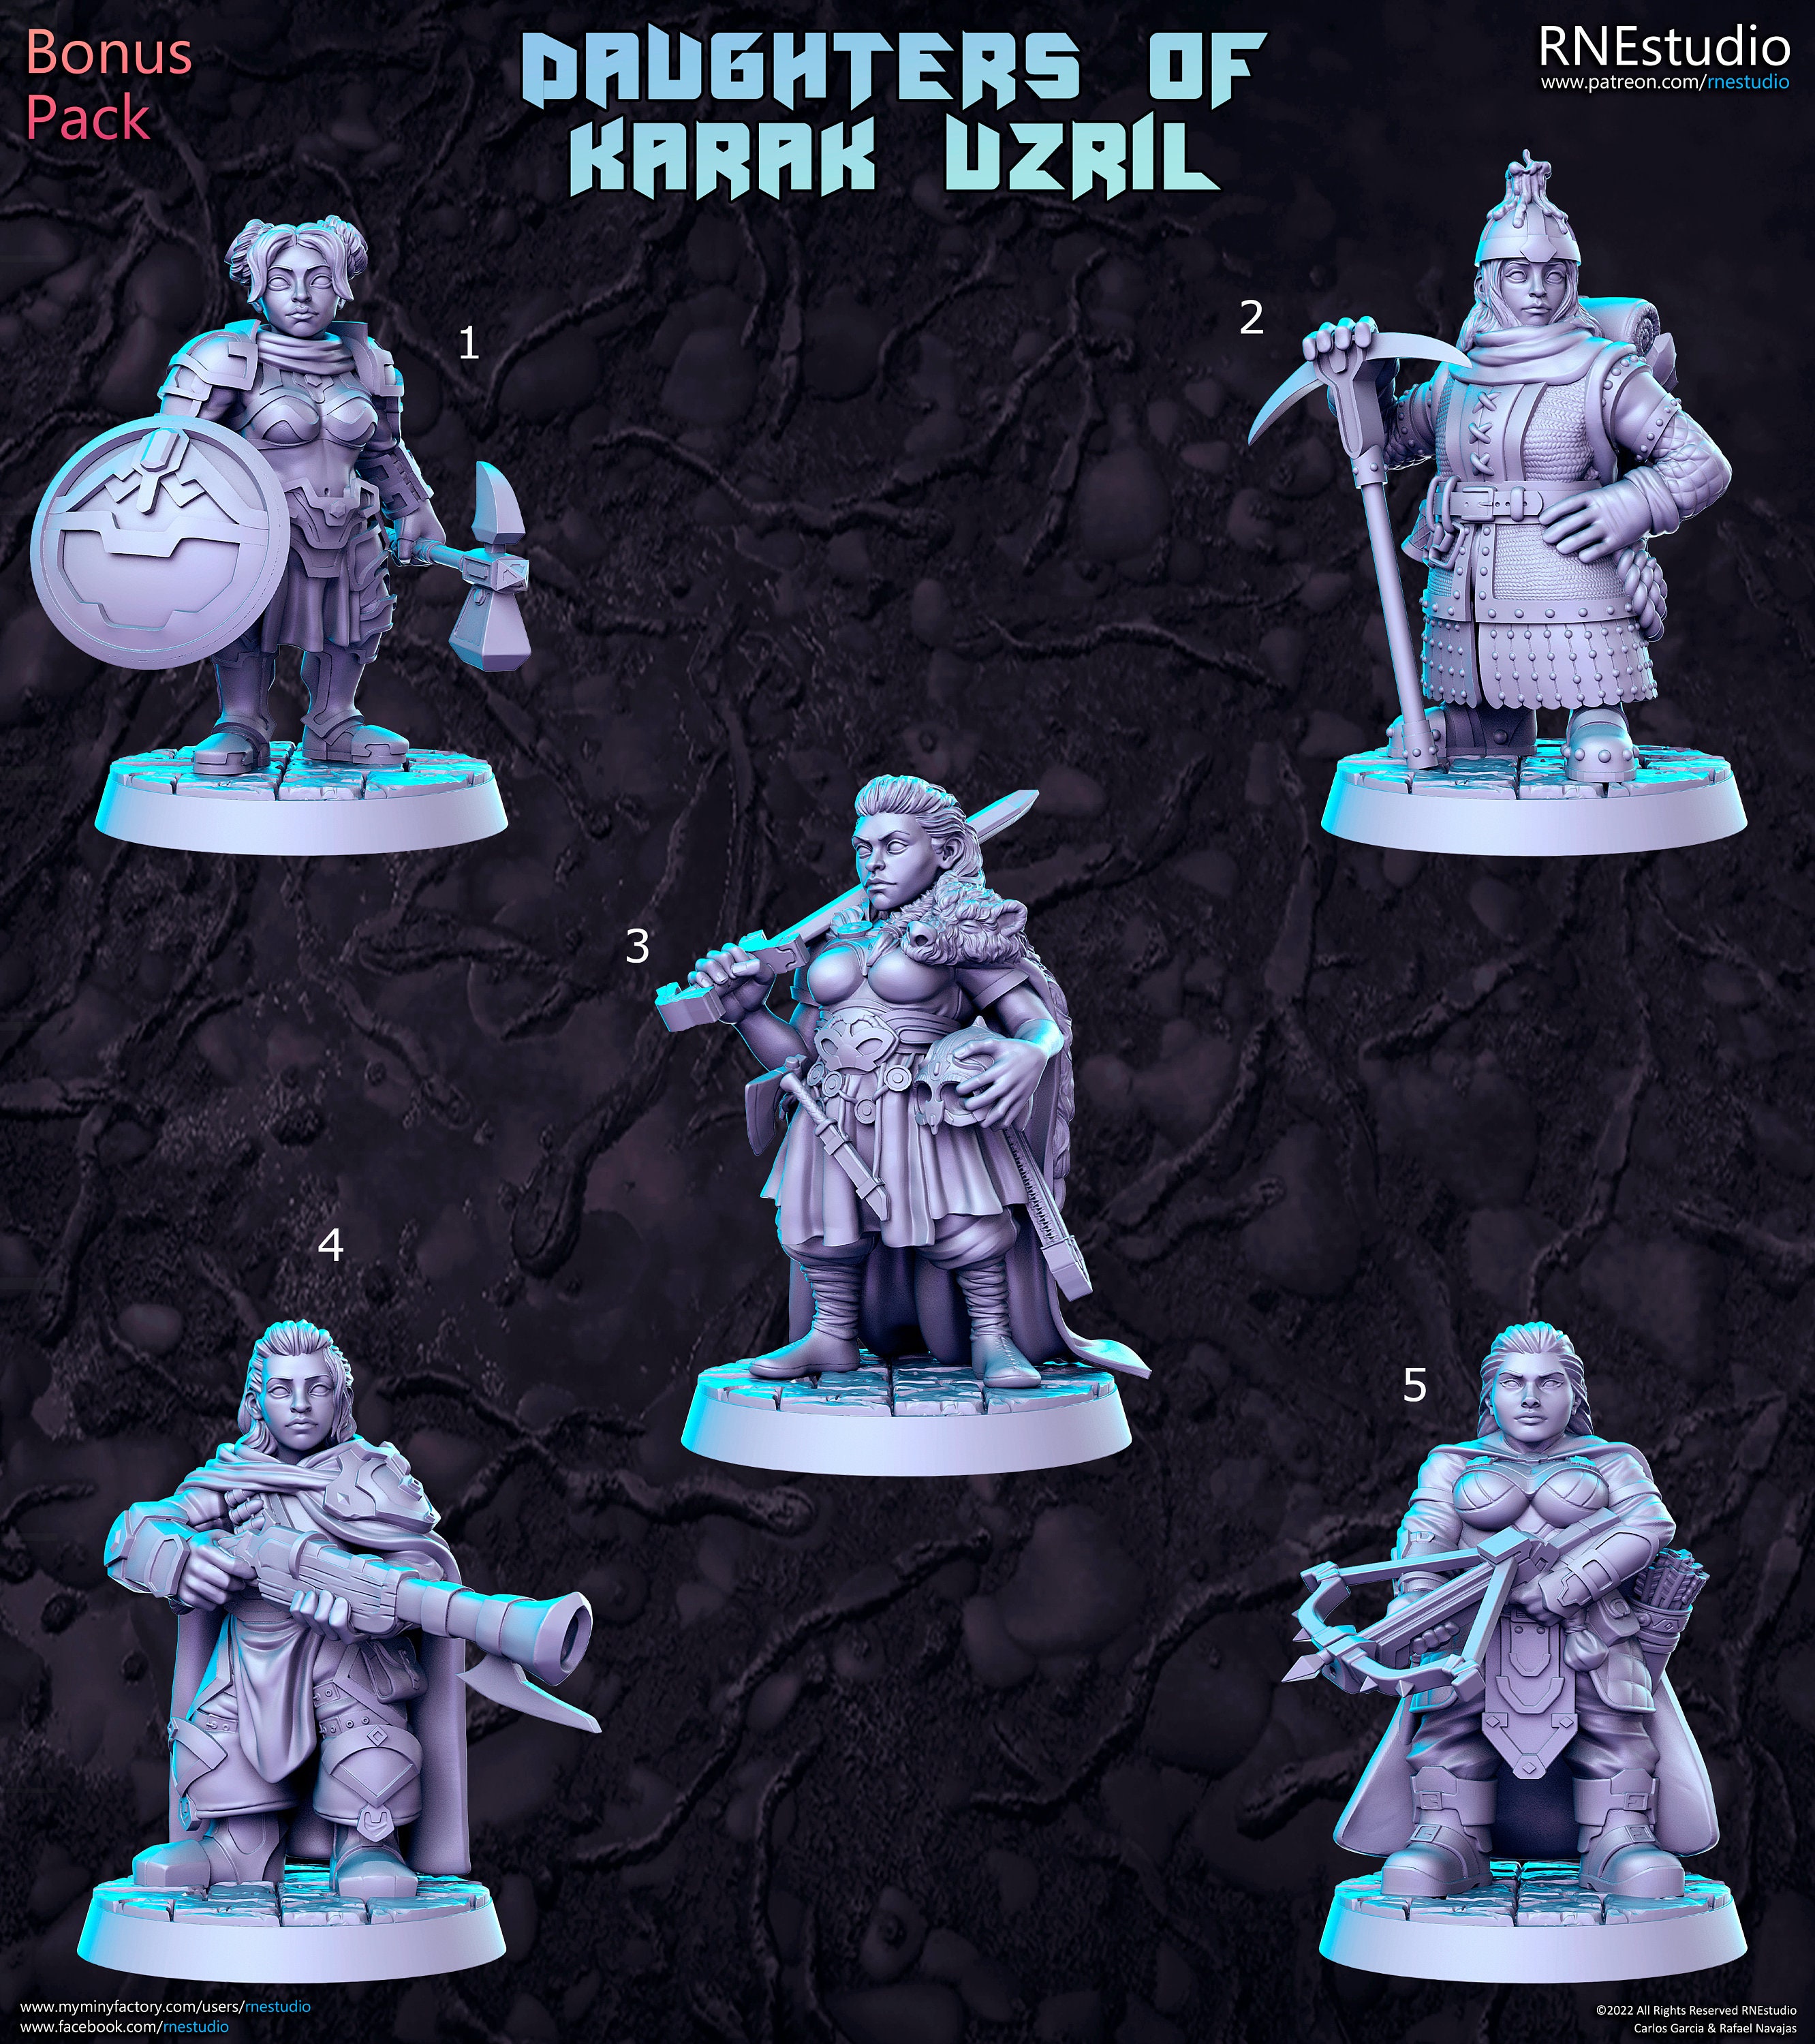 Daughters of Karak Uzril Giochi da tavolo in miniatura stampati in resina  3D D&D Dungeons and Dragons -  Italia